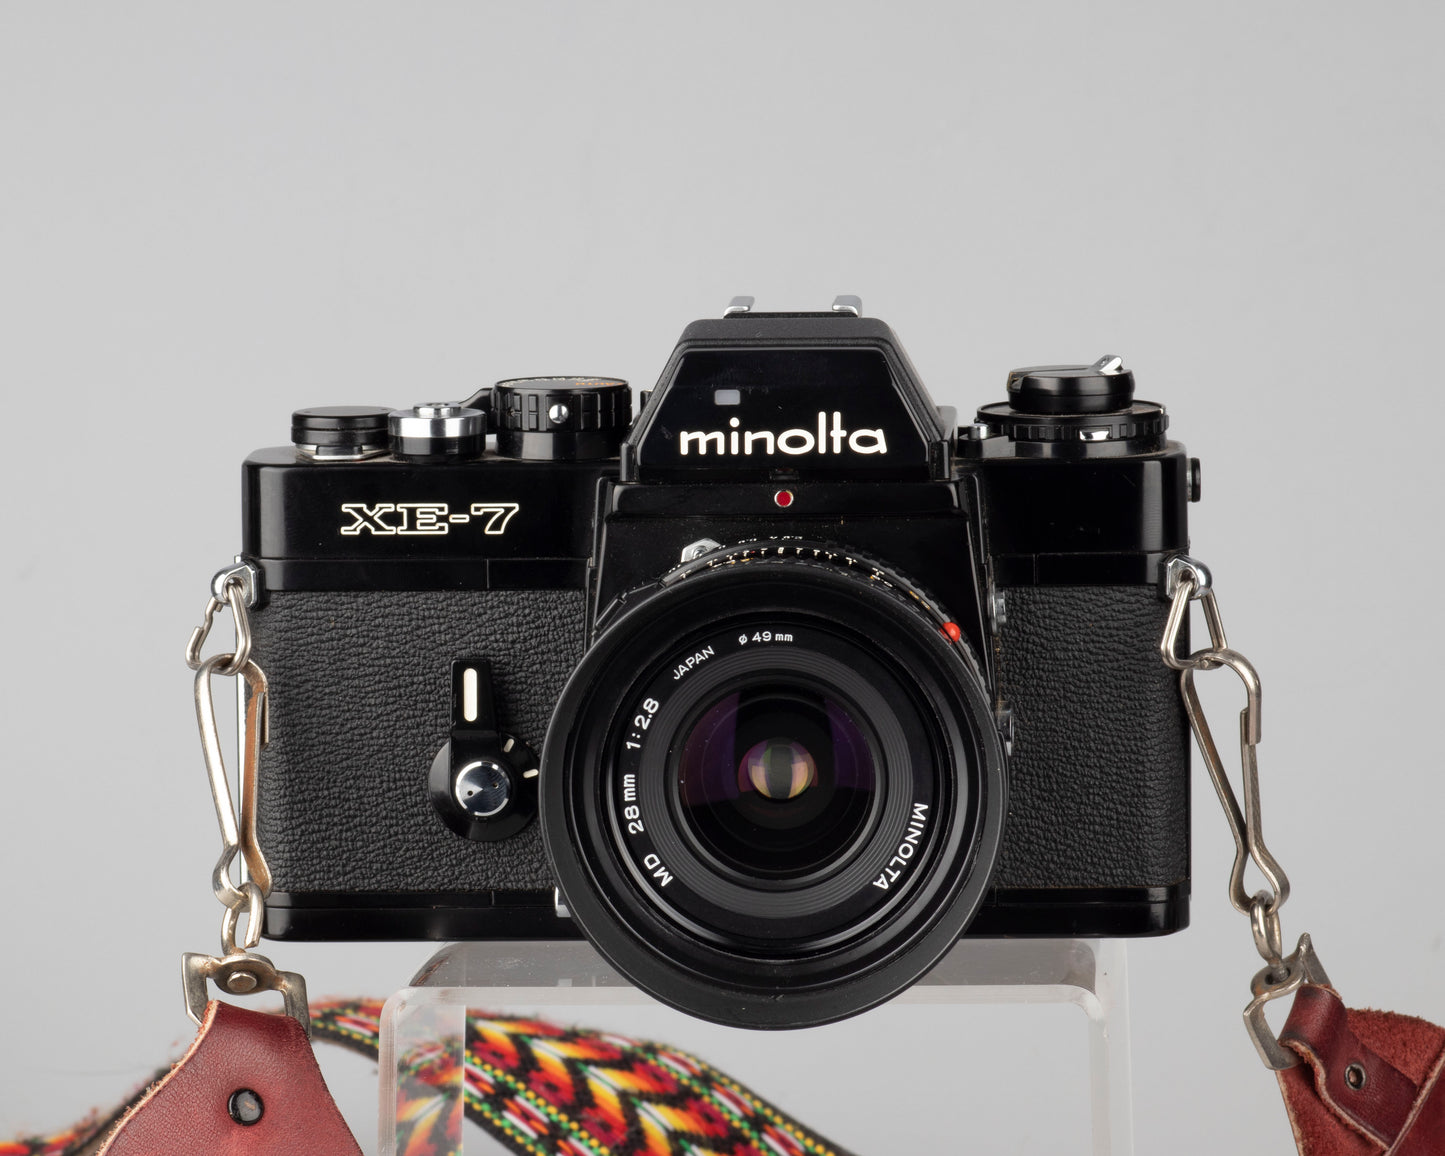 Minolta XE-7 35 mm SLR (série 1199607) avec objectif Minolta MD 28 mm f2.8